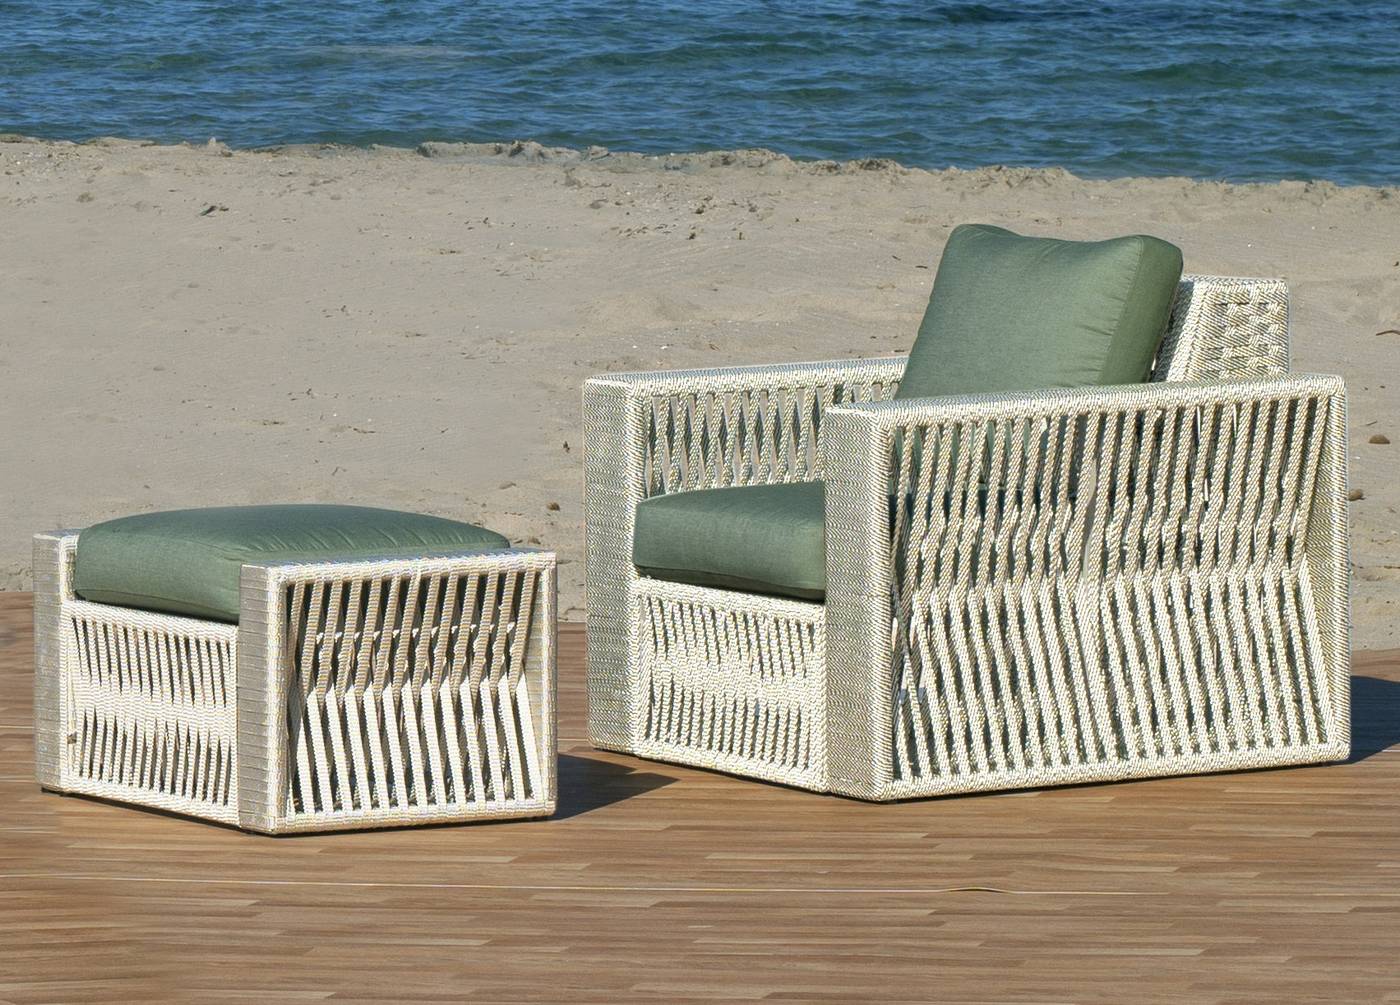 Set Aluminio Prusia-10 - Conjunto aluminio-cuerda: 1 sofá de 3 plazas + 2 sillones + 1 mesa de centro + 2 taburetes. Disponible en color blanco, gris, oro o champagne.